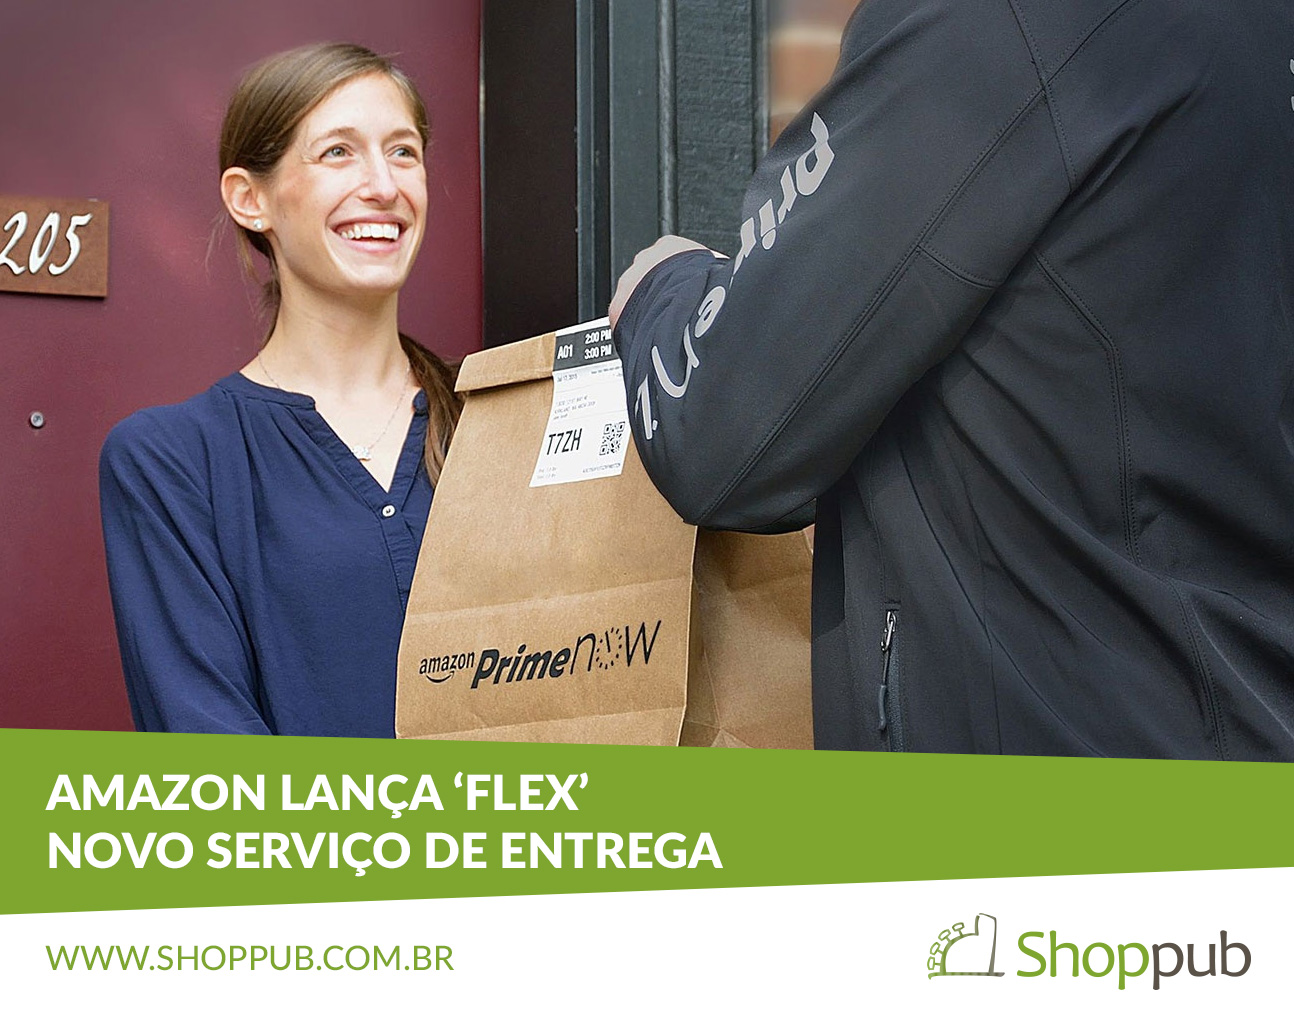 Amazon lança ‘Flex’, seu novo serviço de entrega